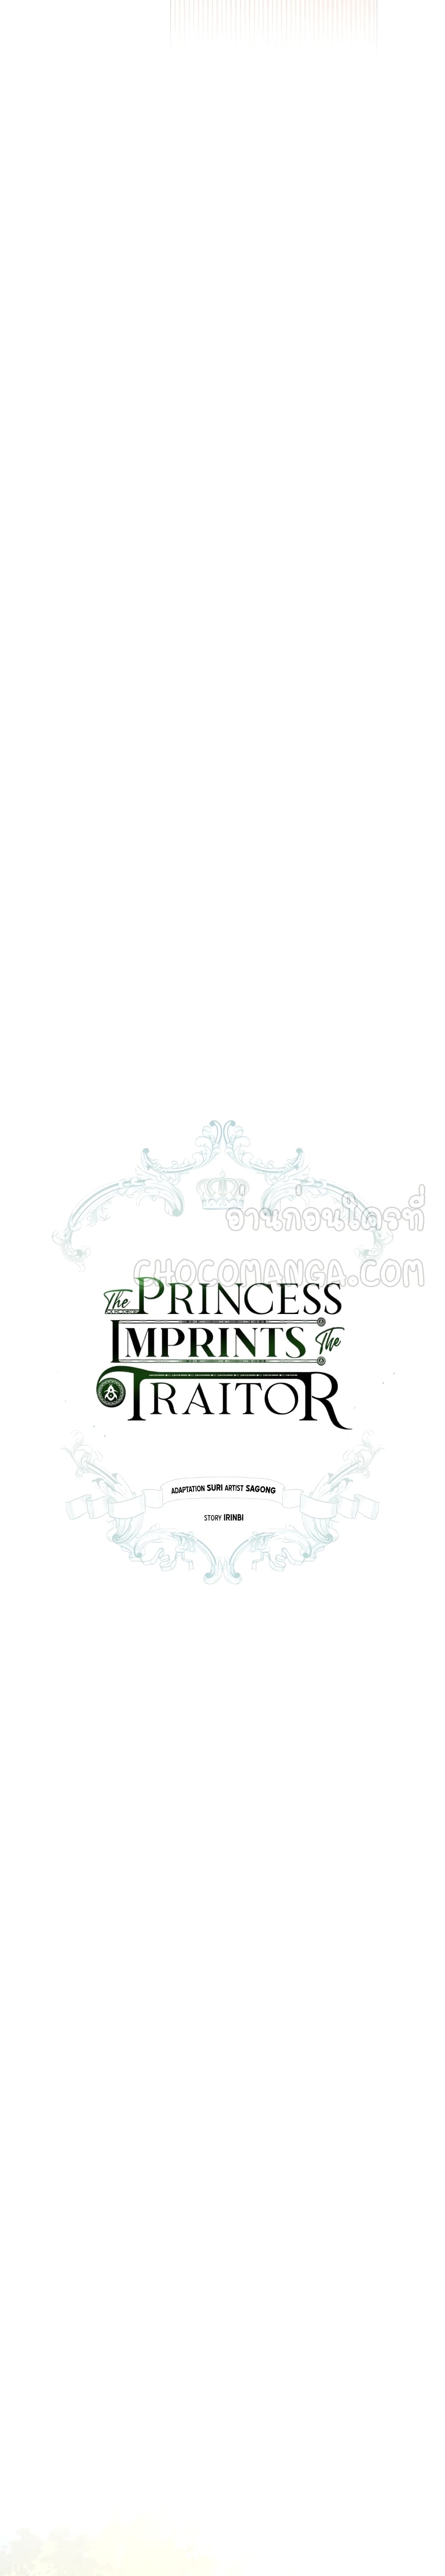 Princess Imprints 14 (5)